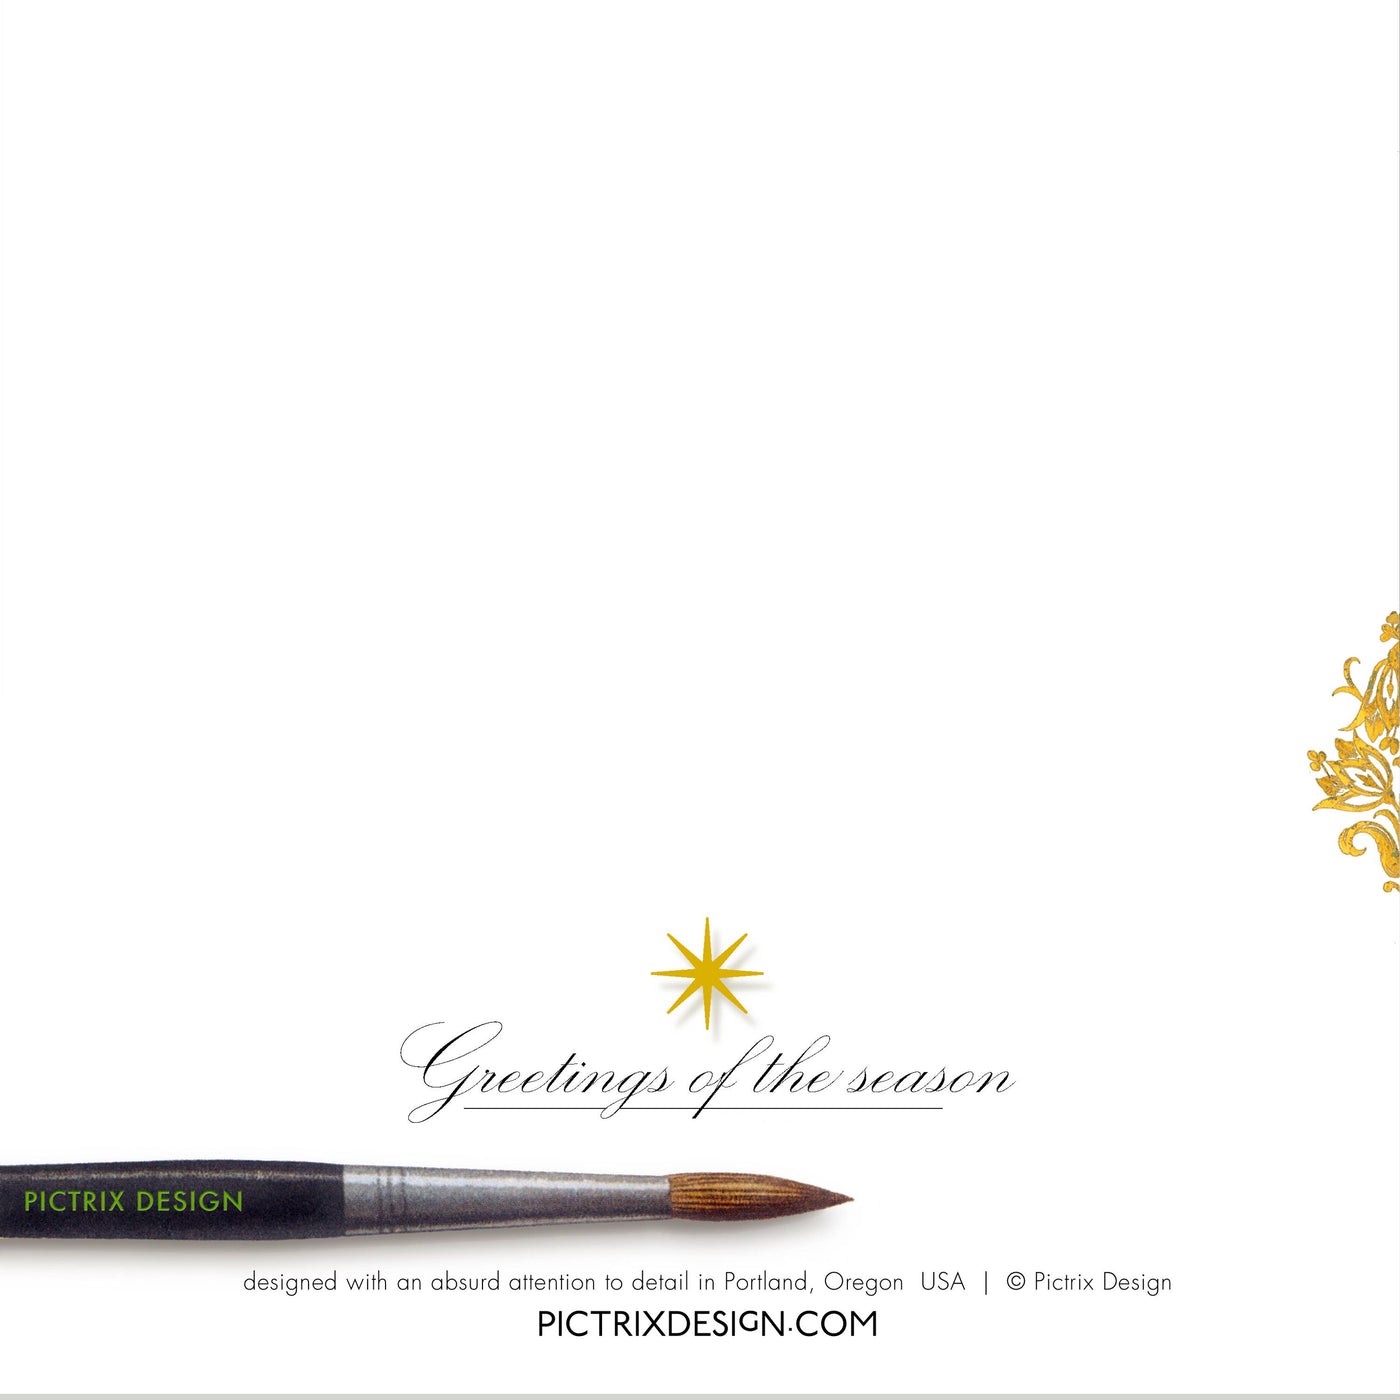 "Greetings of the season" A7 winter seasonal greeting card: Recycled white envelope